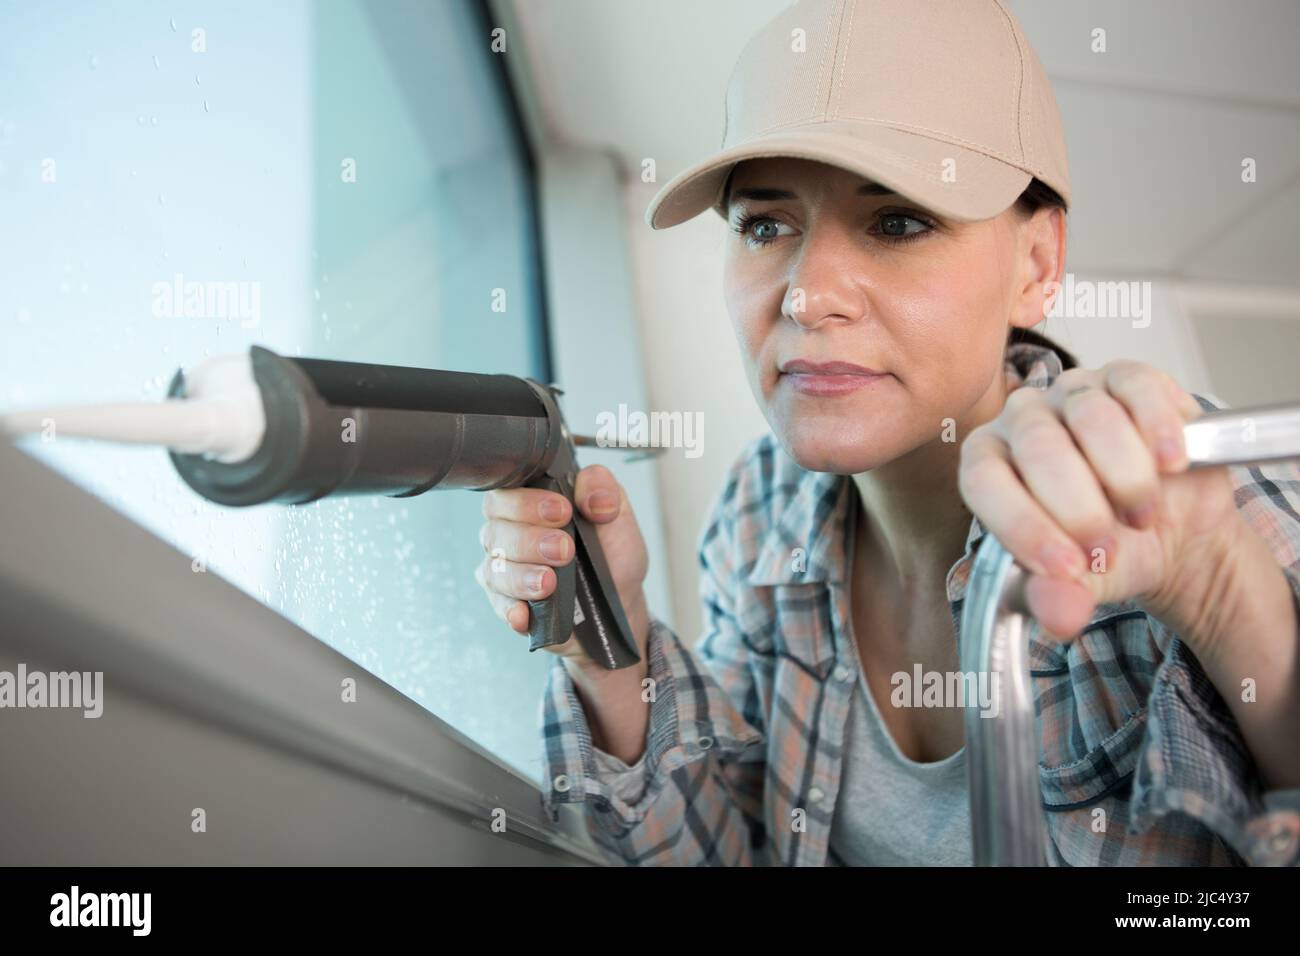 woman window installer applying caulking Stock Photo